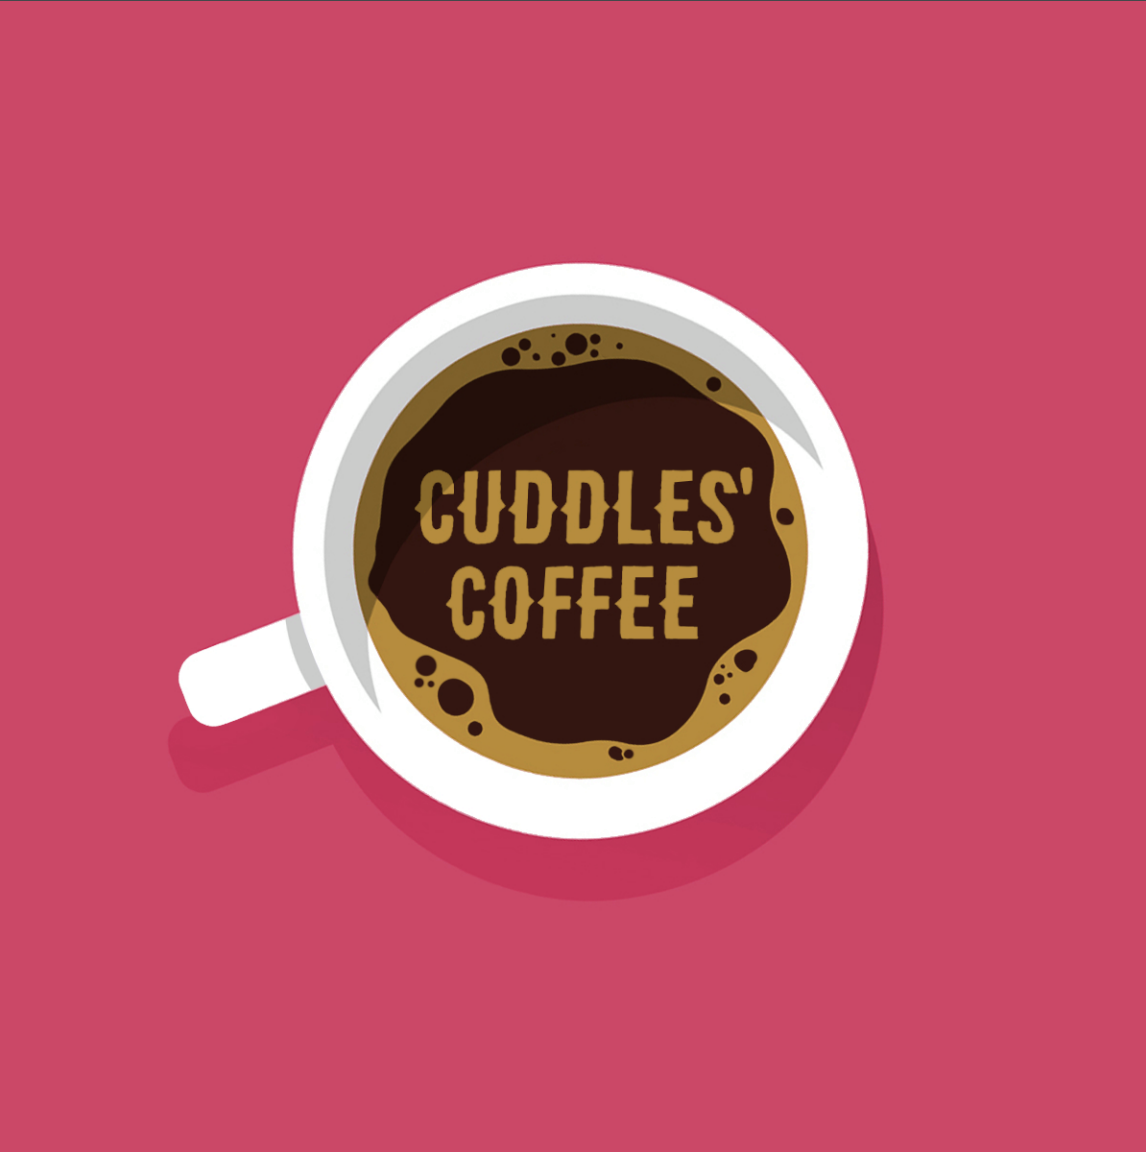 Cuddles’ Coffee (Logo Design)